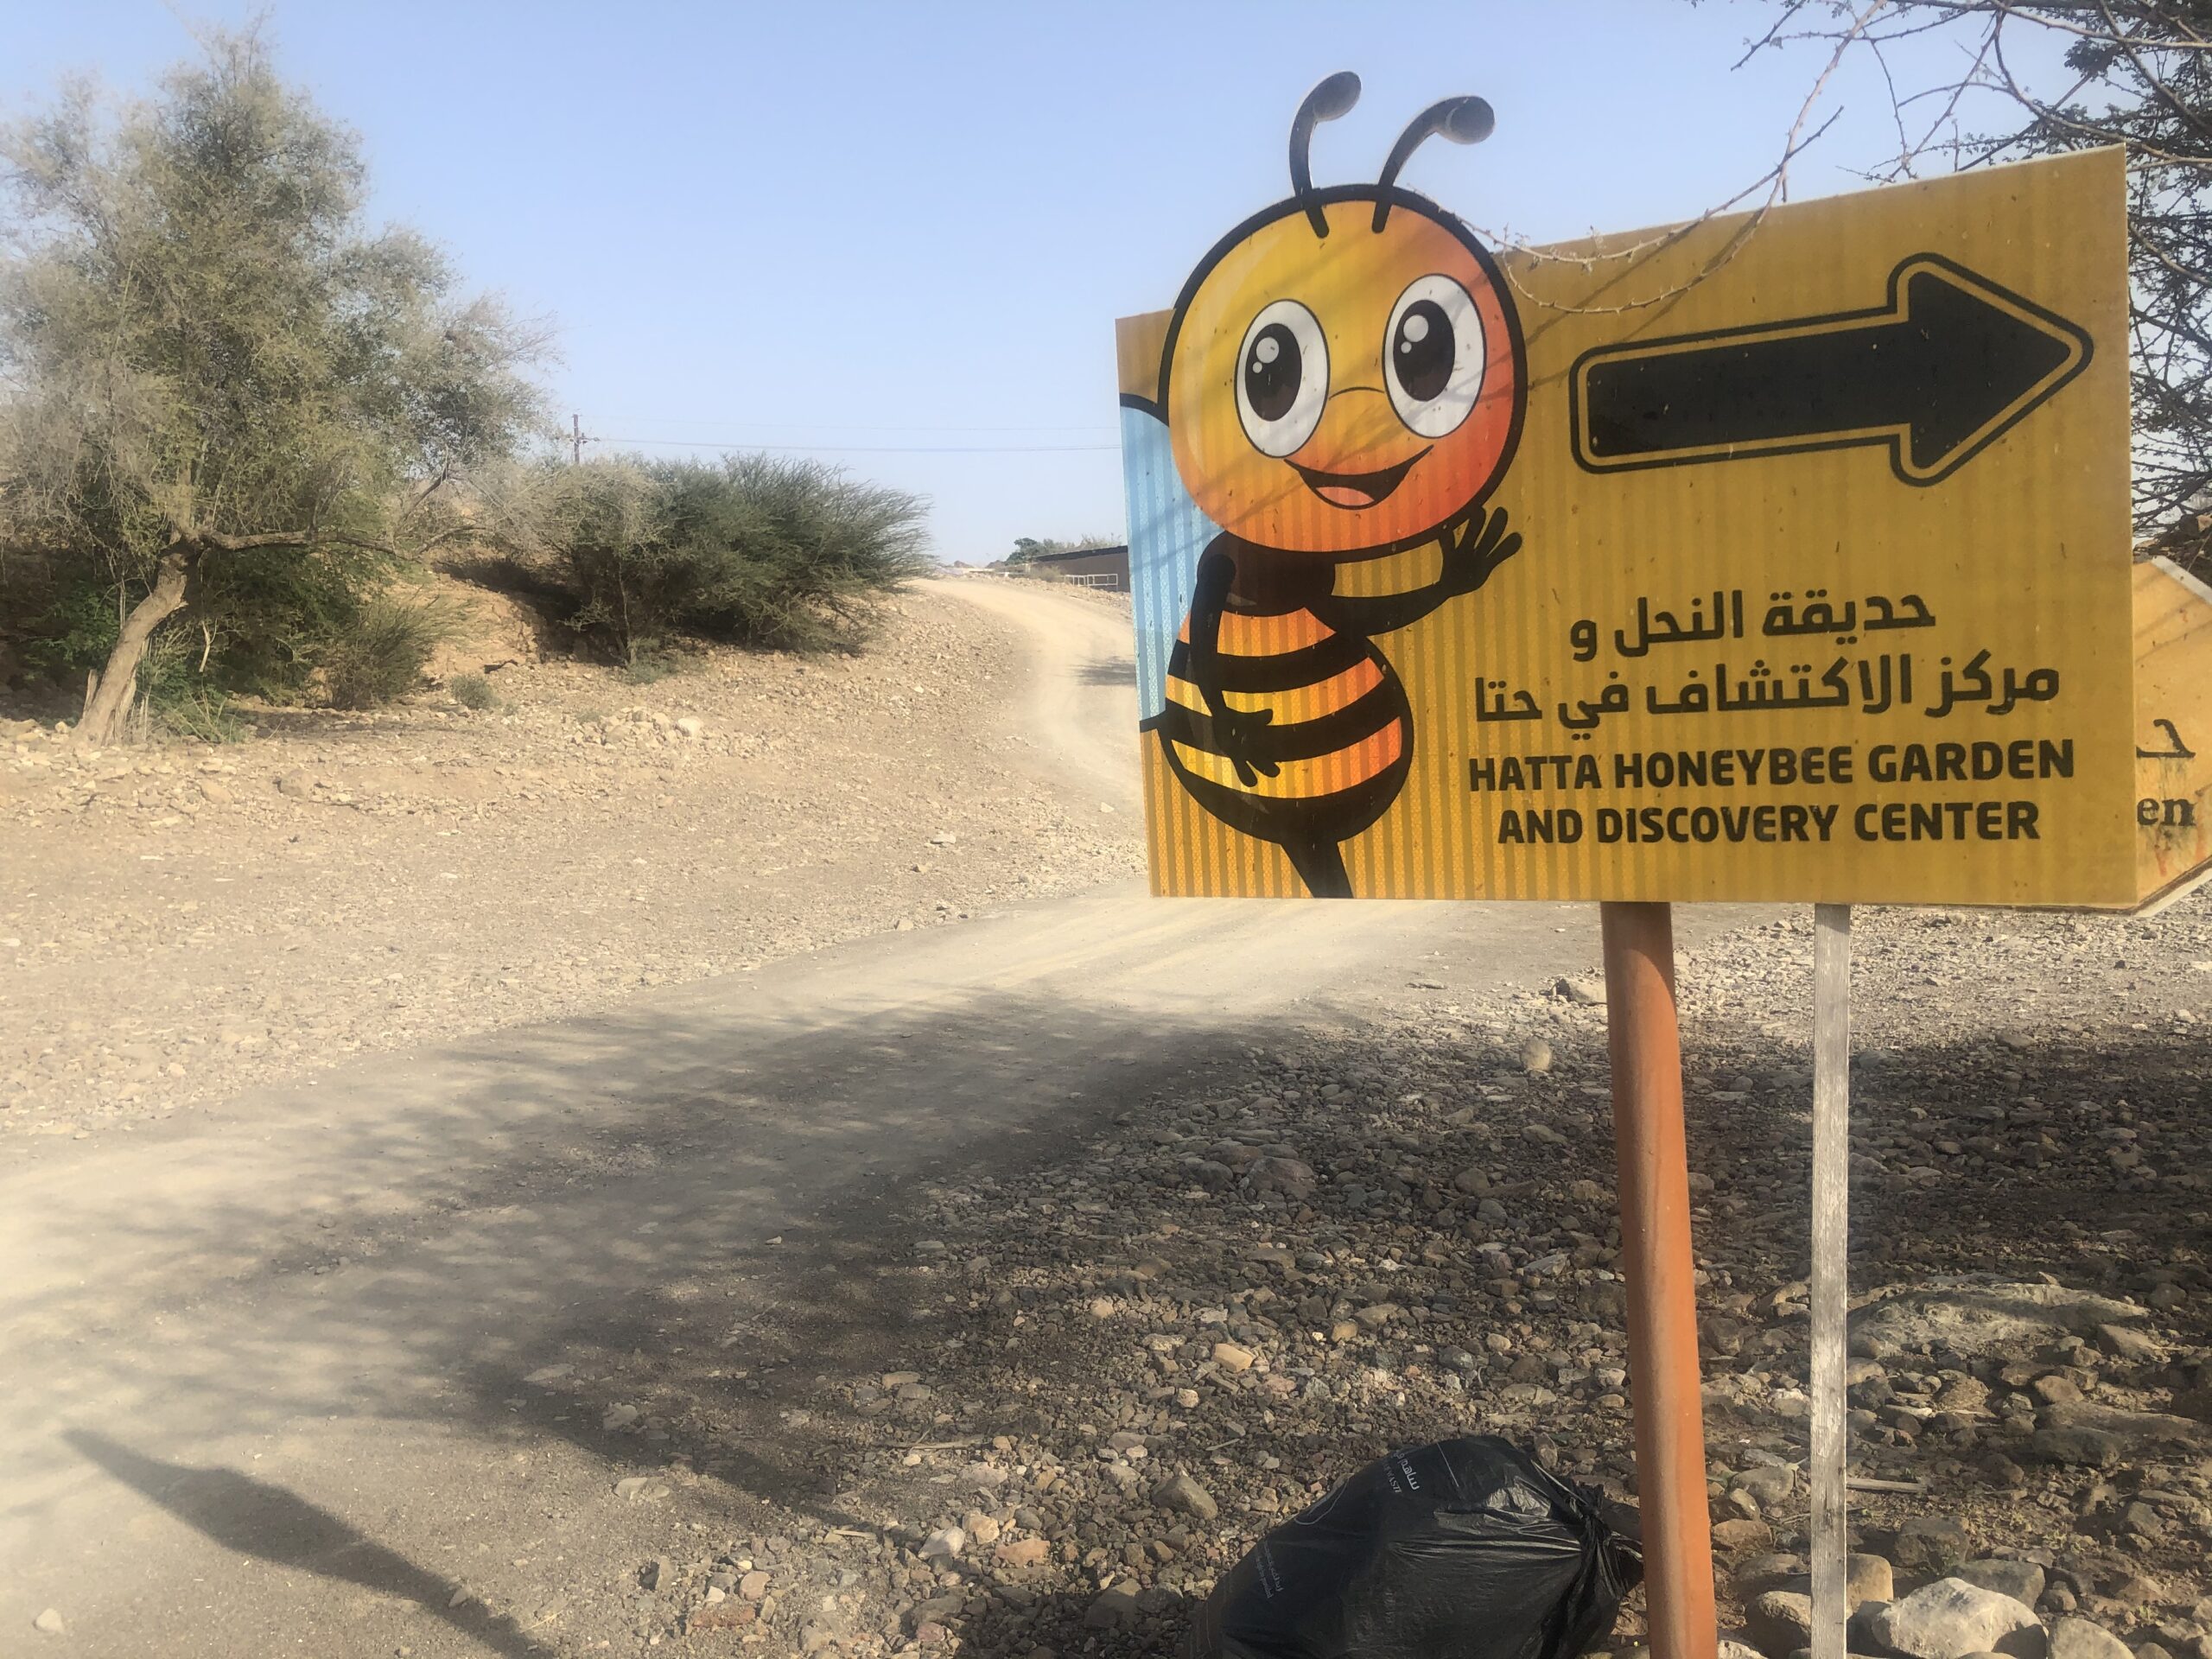 Hatta Honeybee Garden and Discovery Center in Dubai